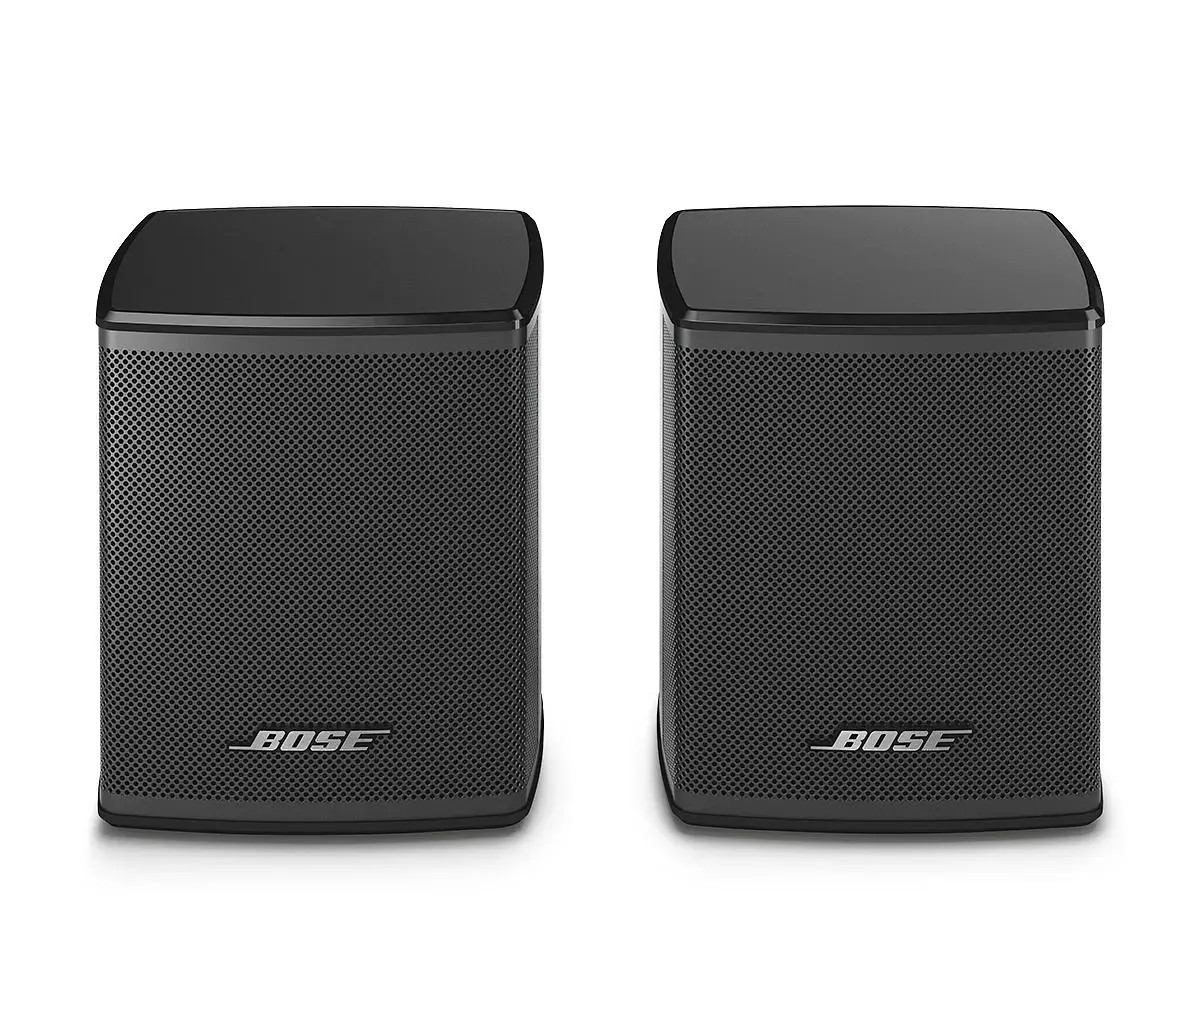 product - Loa vòm Bose Surround Speakers